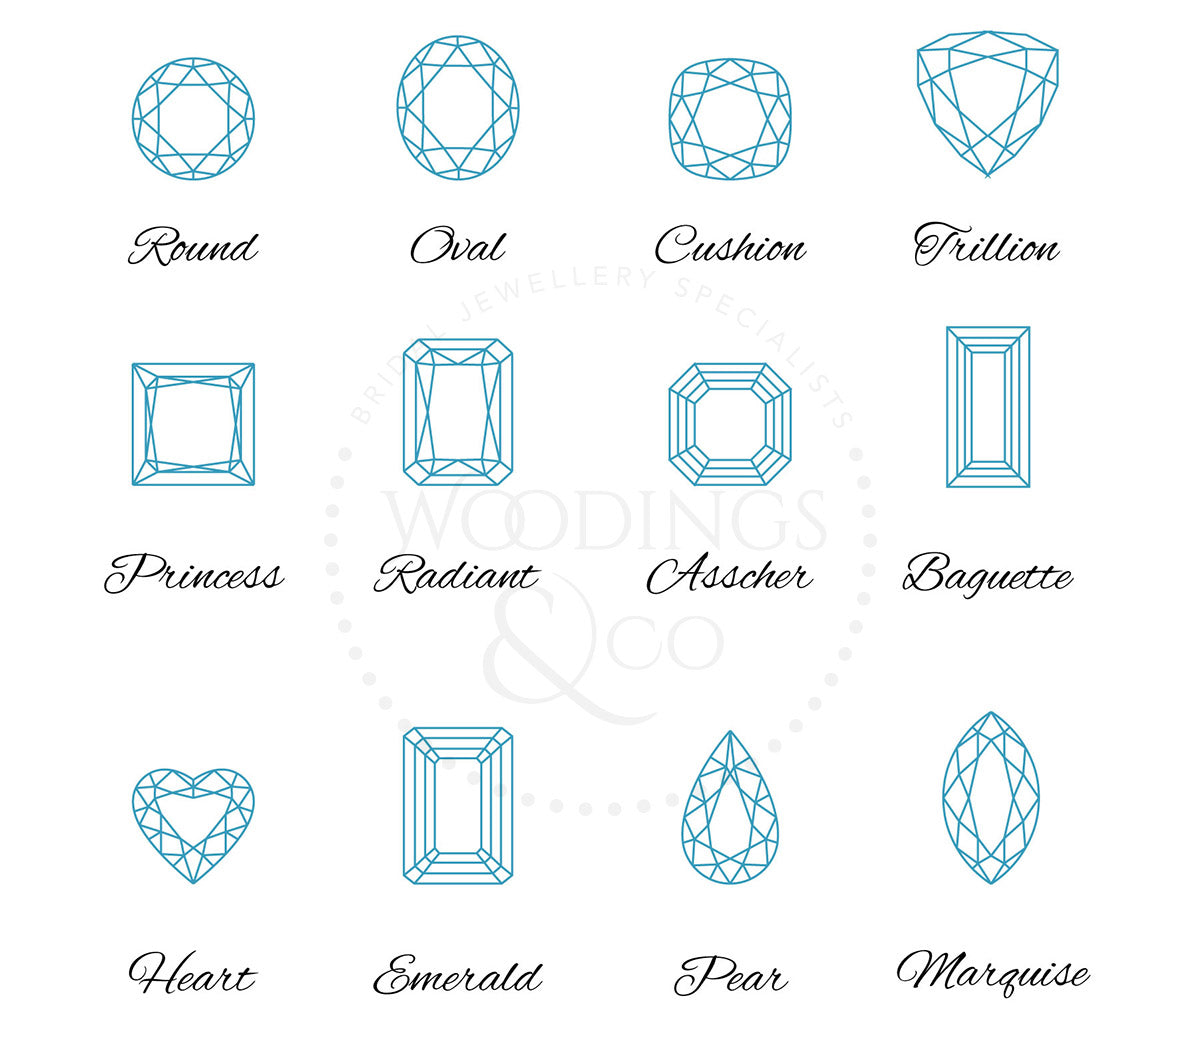 Woodings diamond shapes